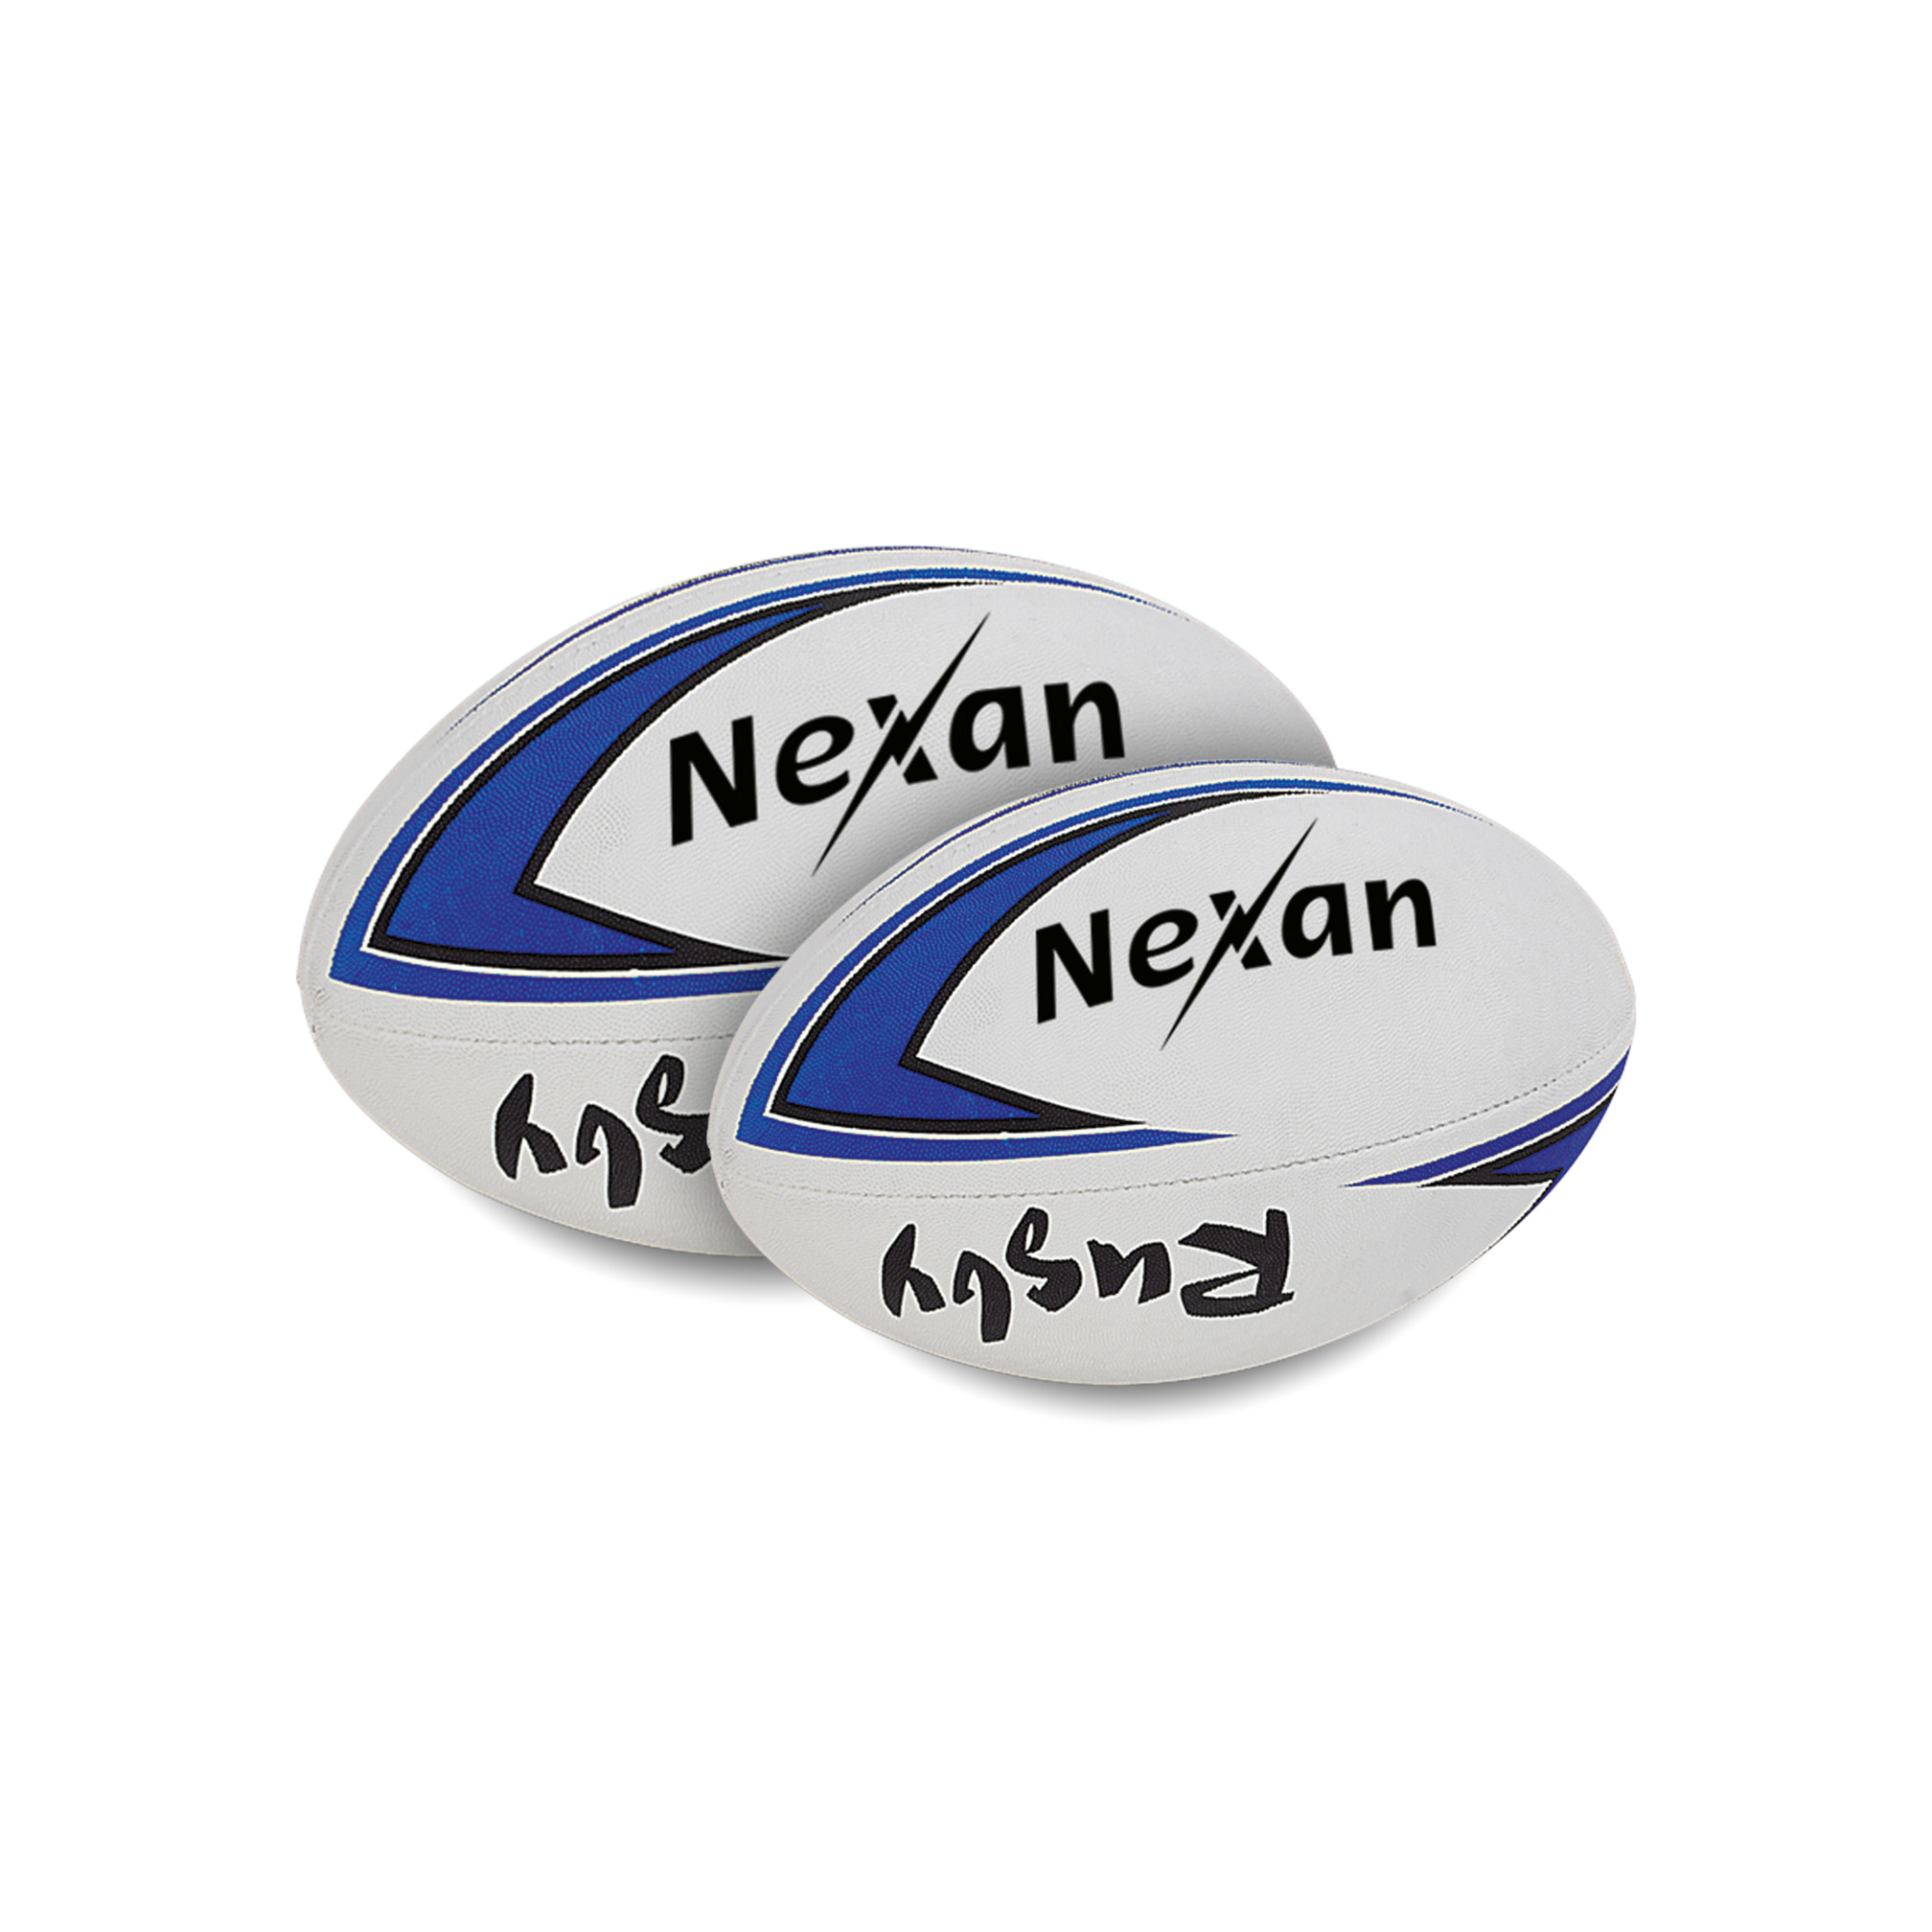 Rugbyball Nexan Nation, Größe 4